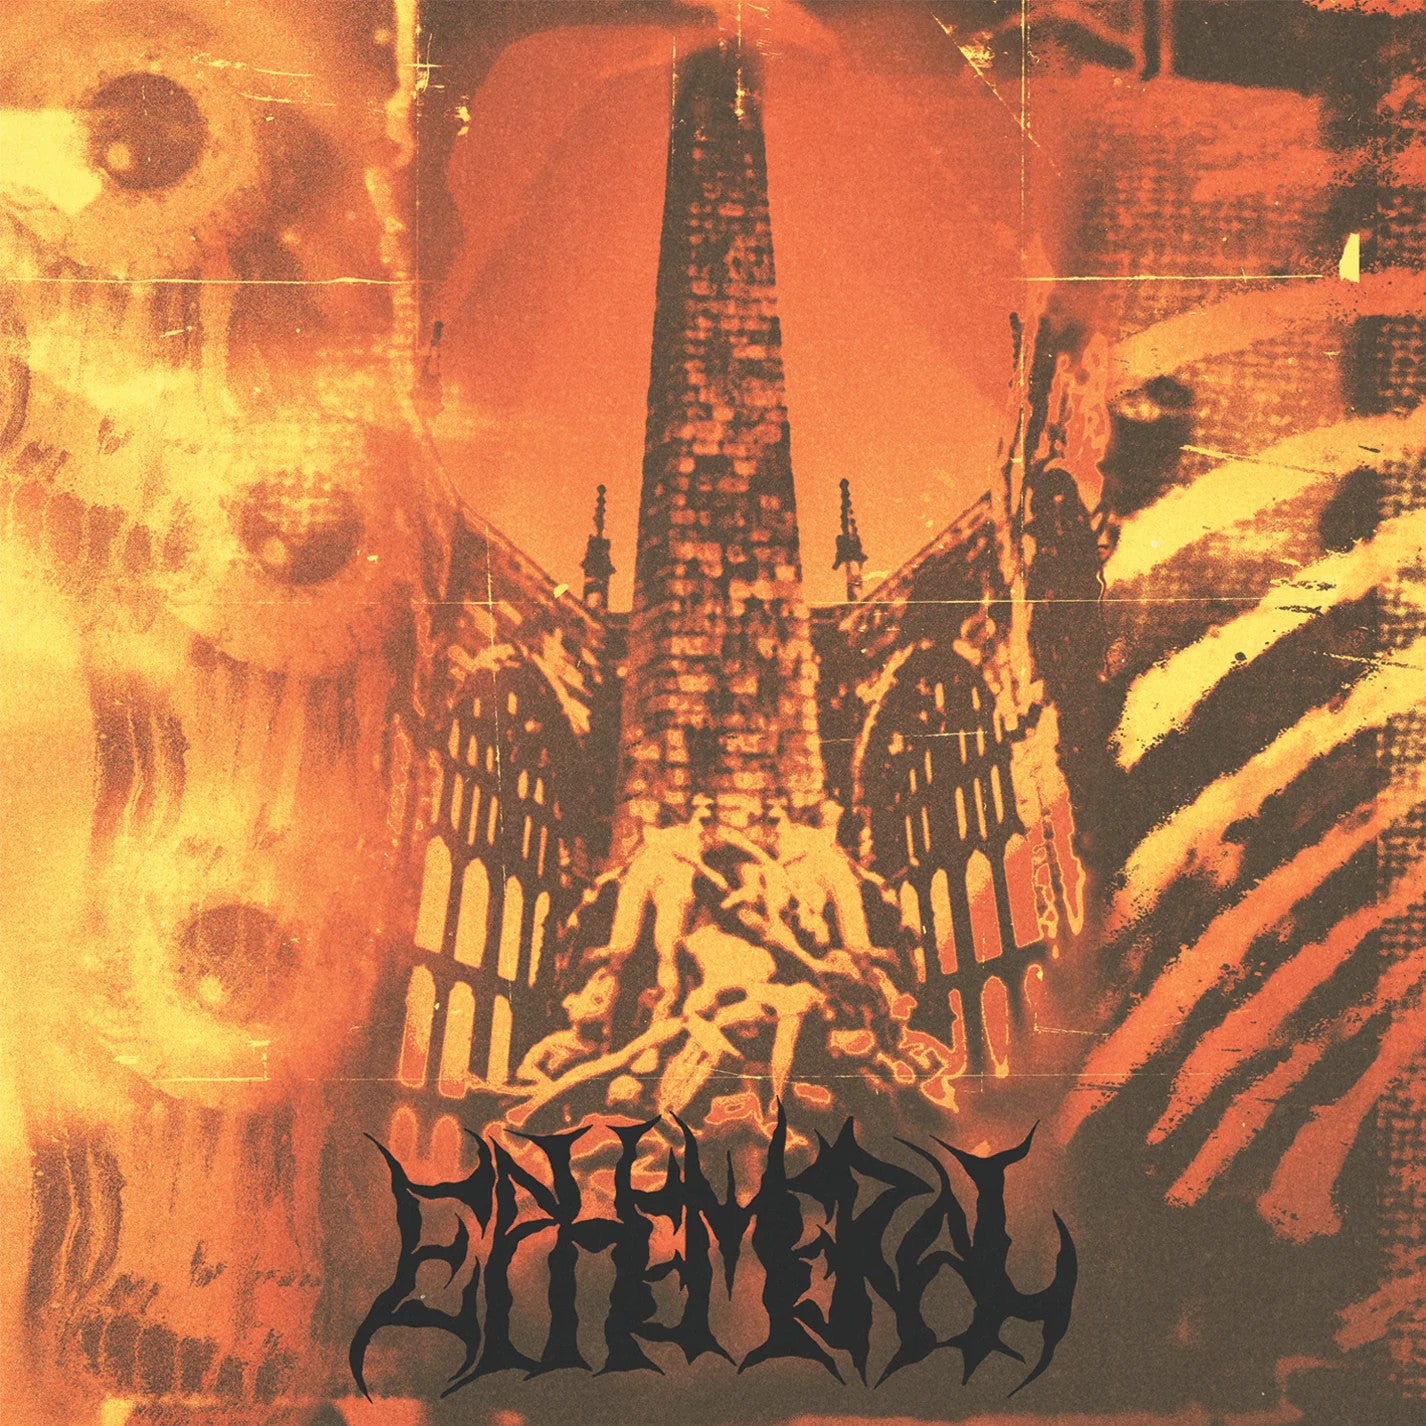 Ephemeral - Tower of Silence (Daze Records) - Darkside Records